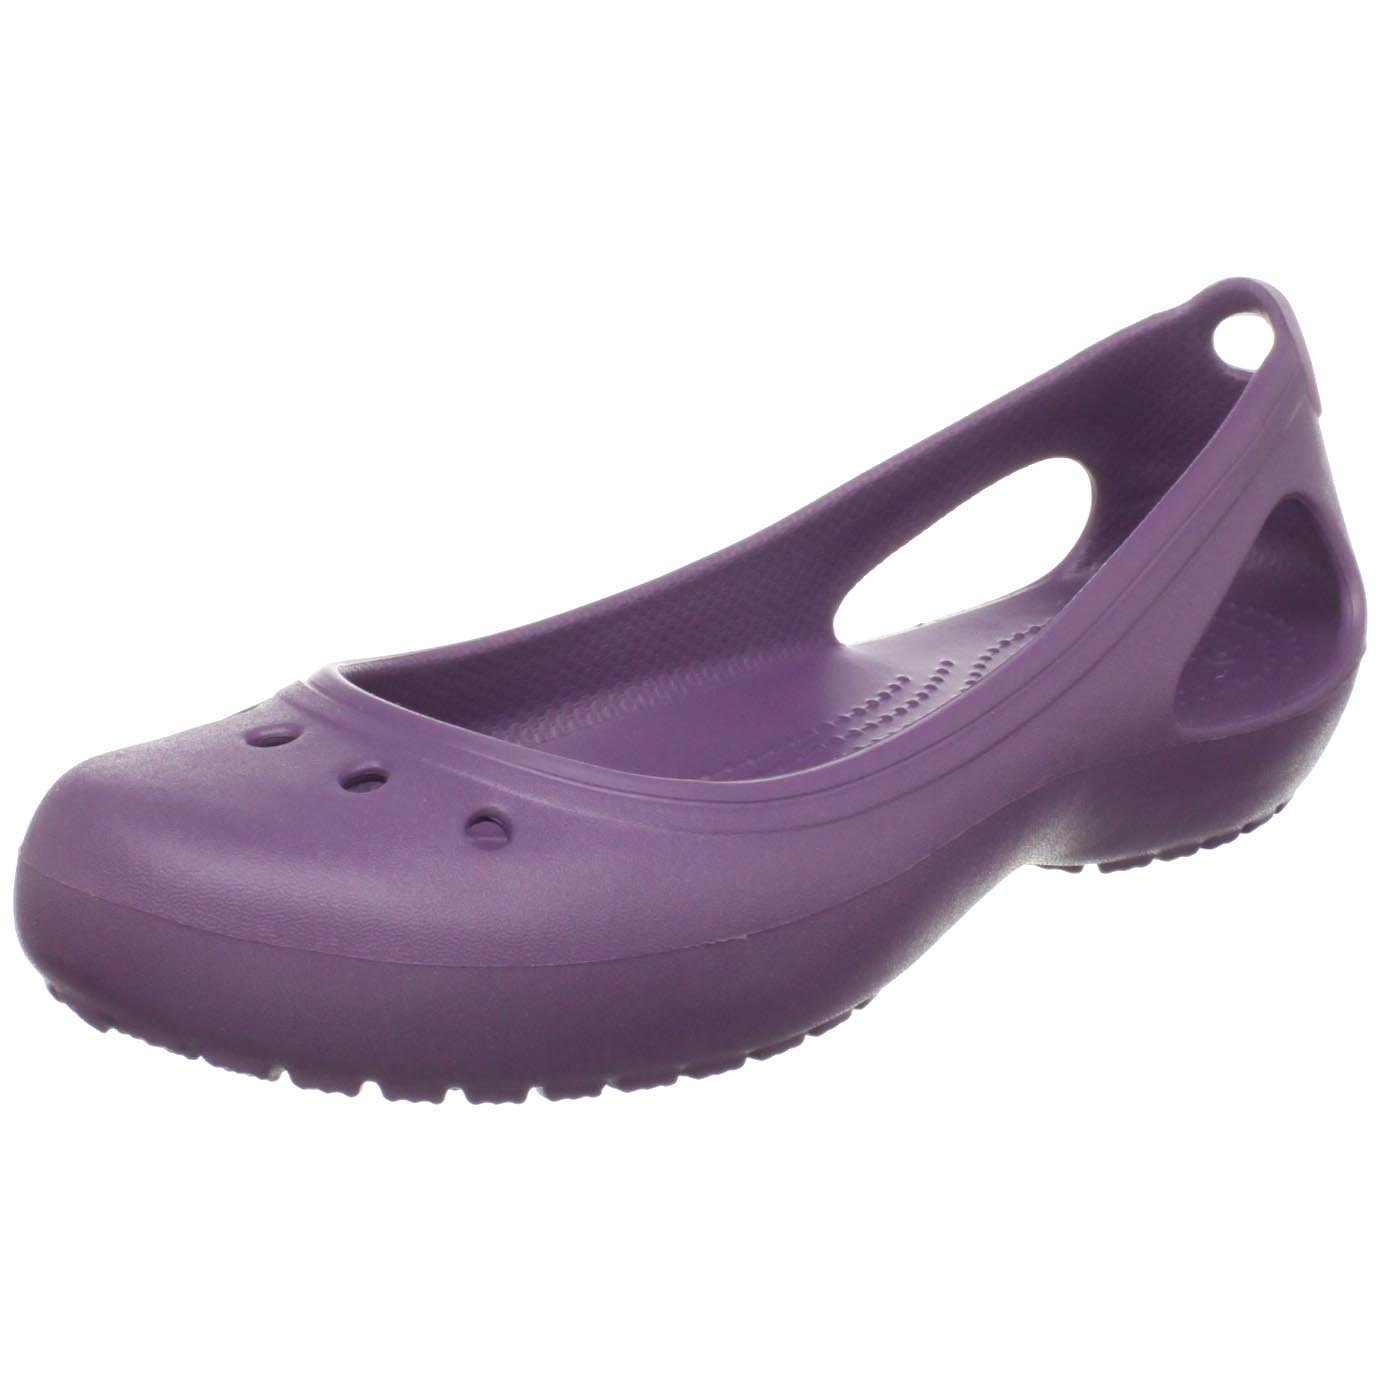  Crocs  Shoes  Women  crocs  Women s  Kadee Ballet Flat